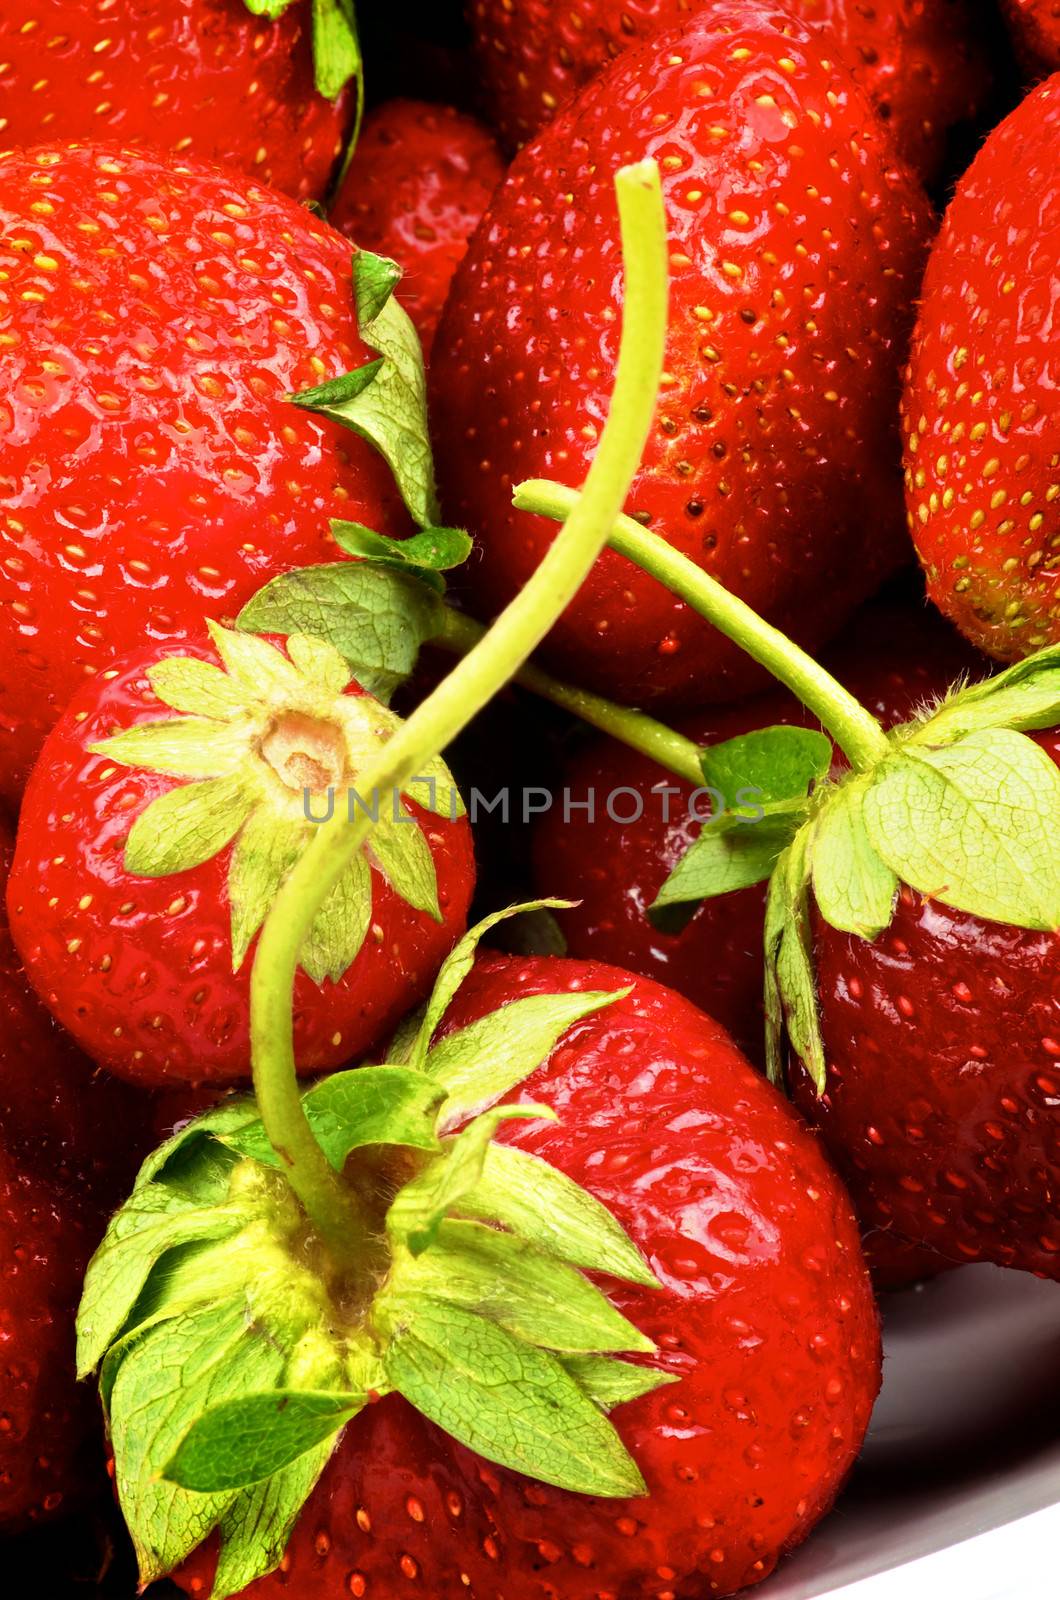 Strawberry Background by zhekos